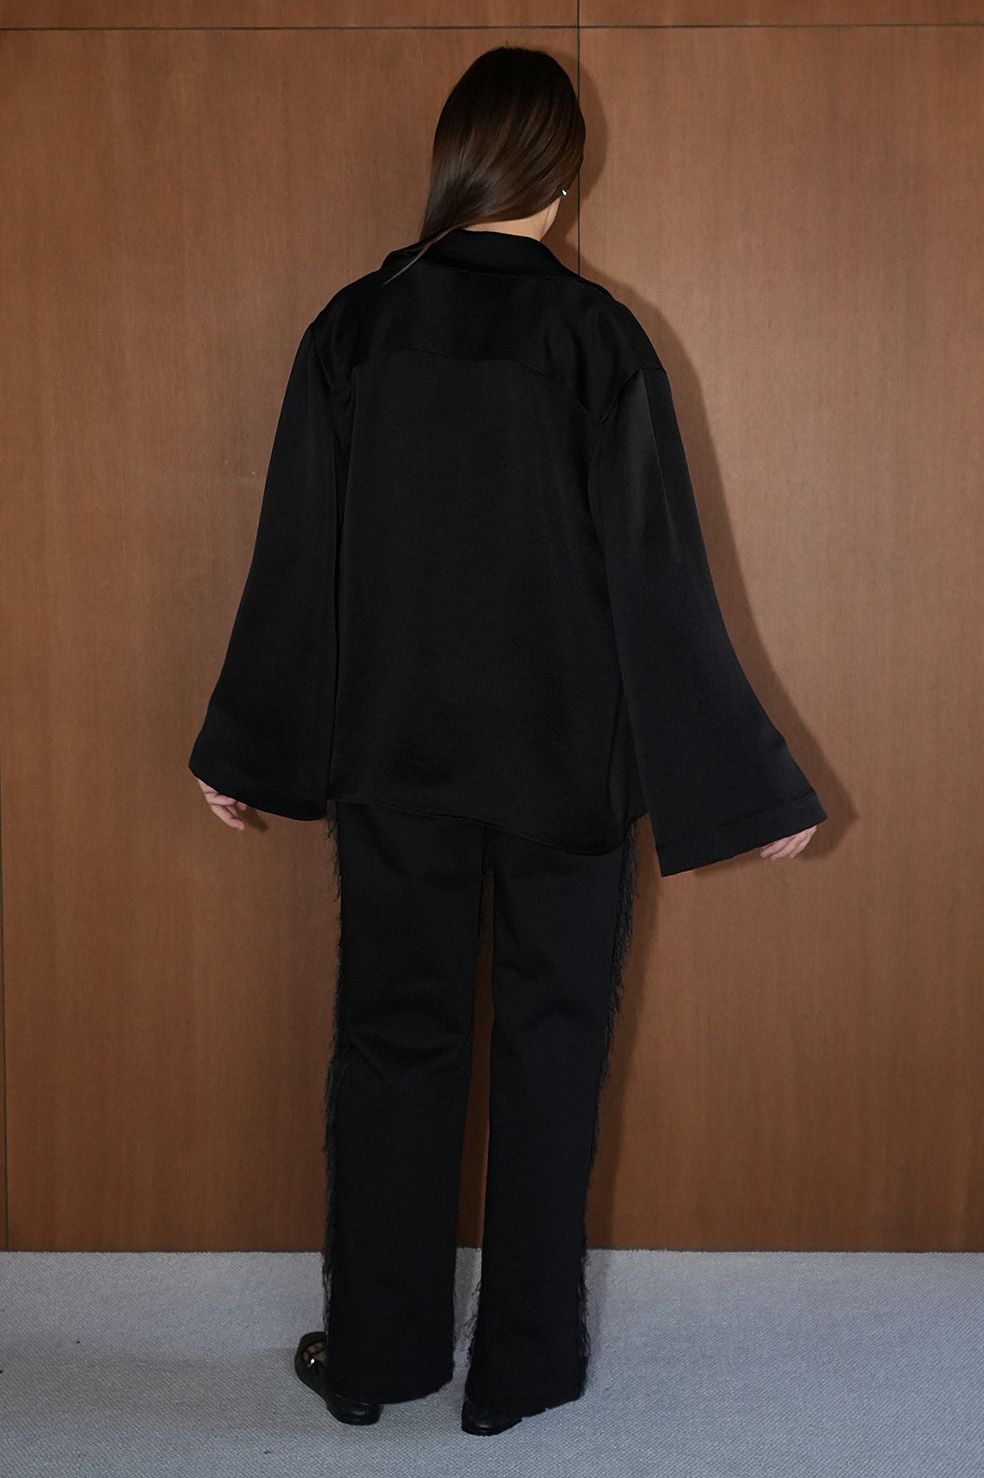 CLANE - TAILORED SATIN SHIRT - BLACK - サテン テーラードシャツ ...